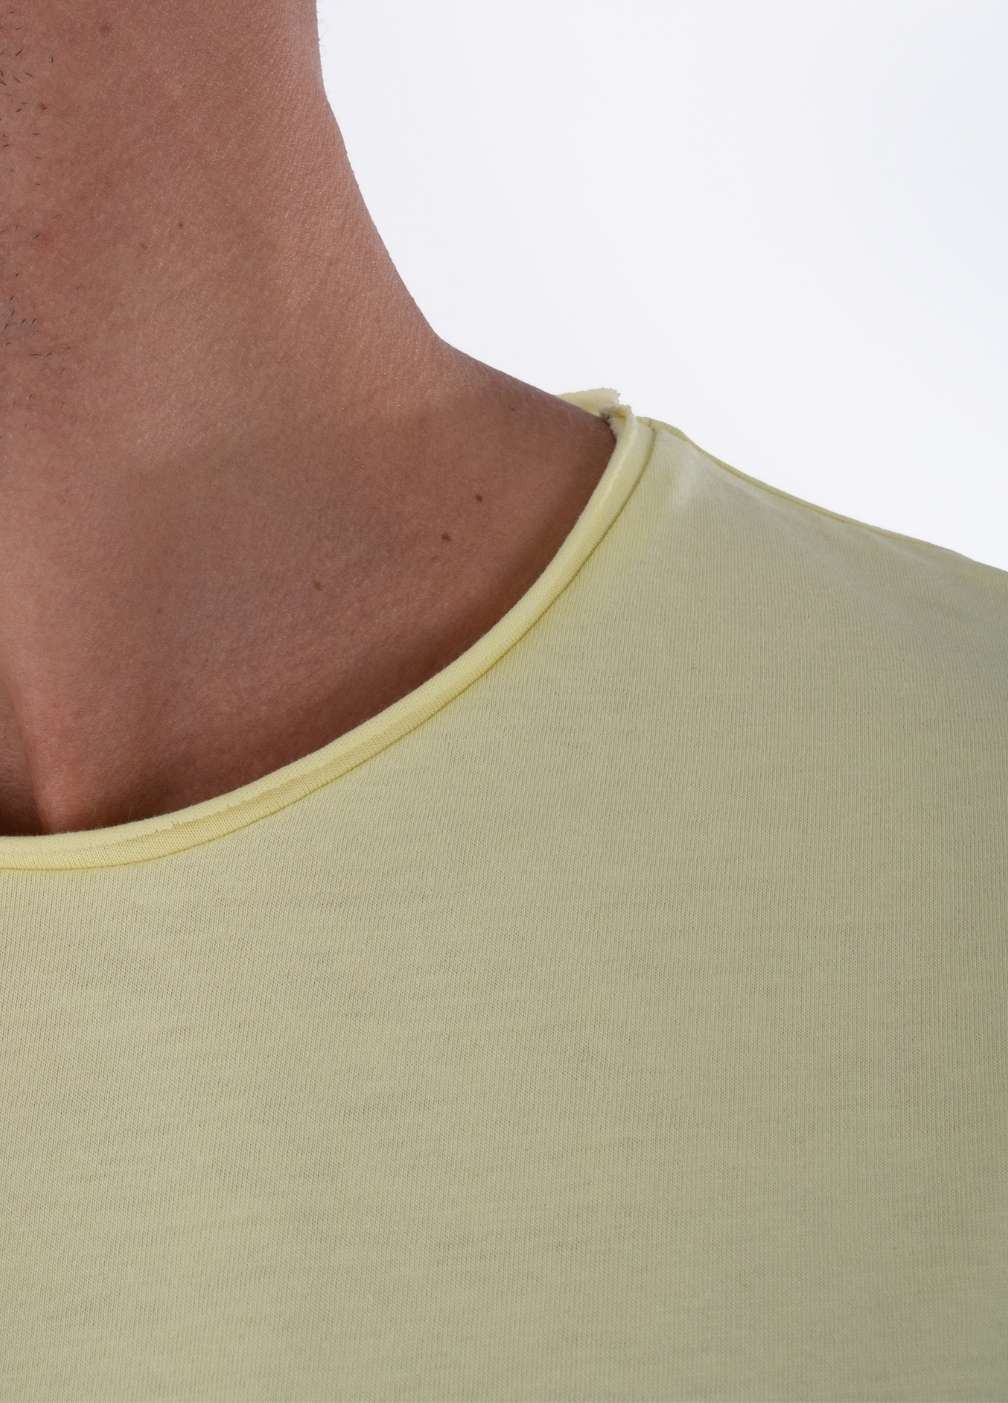 LEMON GRASS T-SHIRT PURE closeup - image of shirt collar - 100% organic cotton t shirts